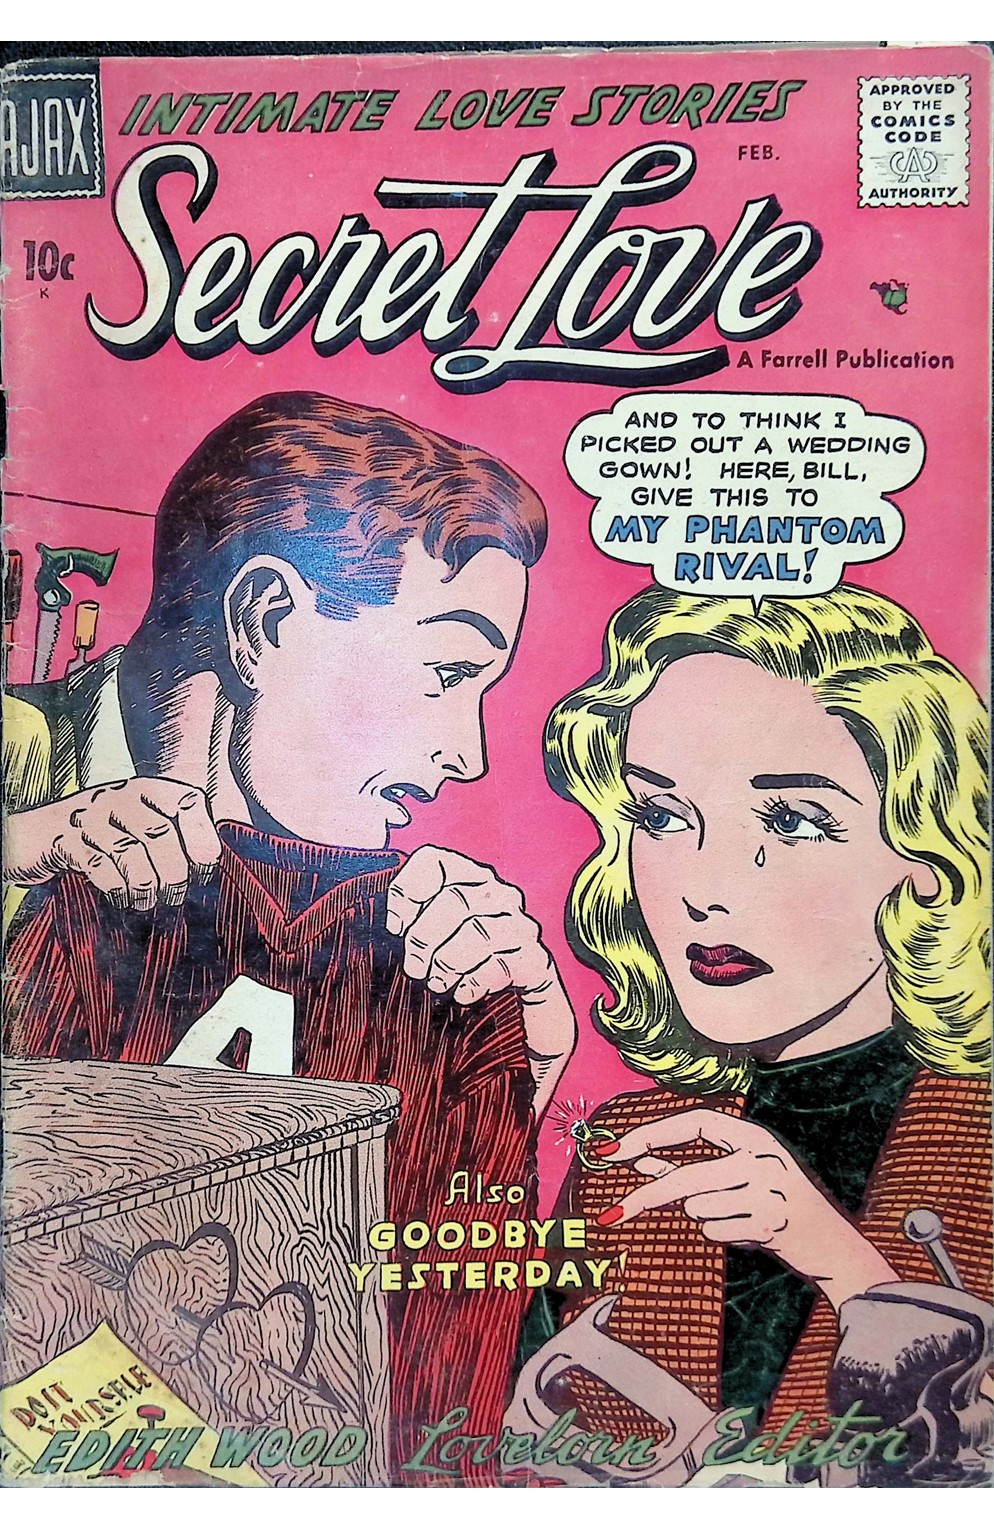 Secret Love #5 - 1958